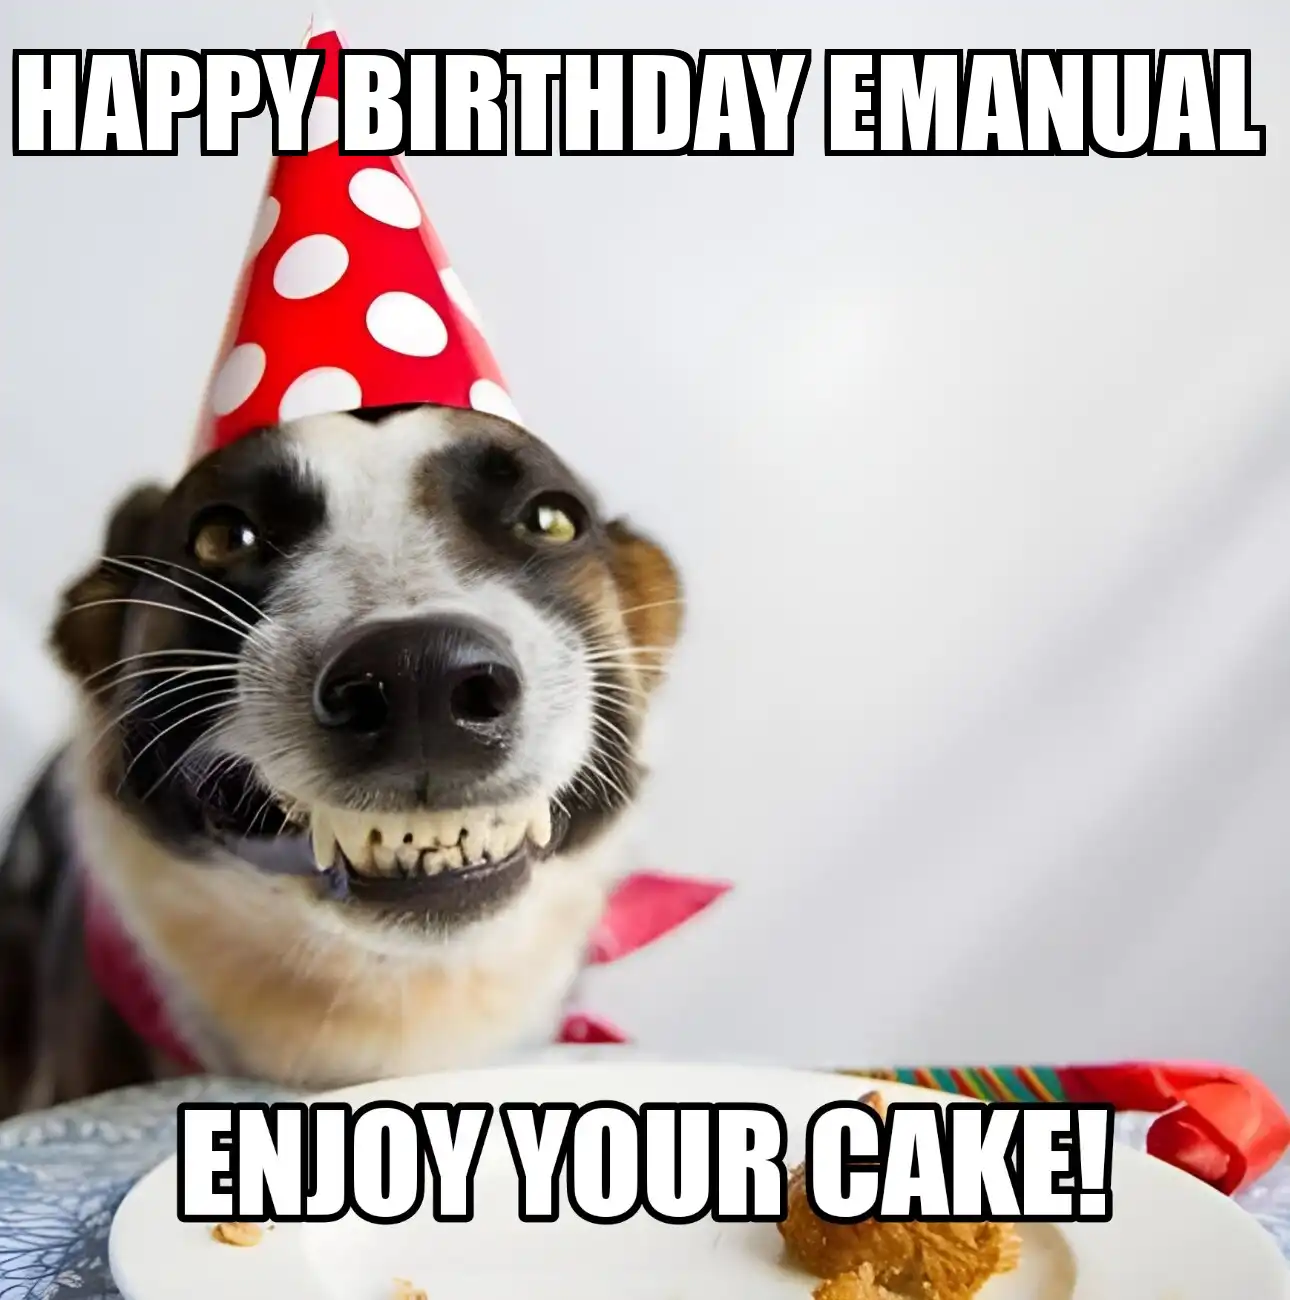 Happy Birthday Emanual Enjoy Your Cake Dog Meme